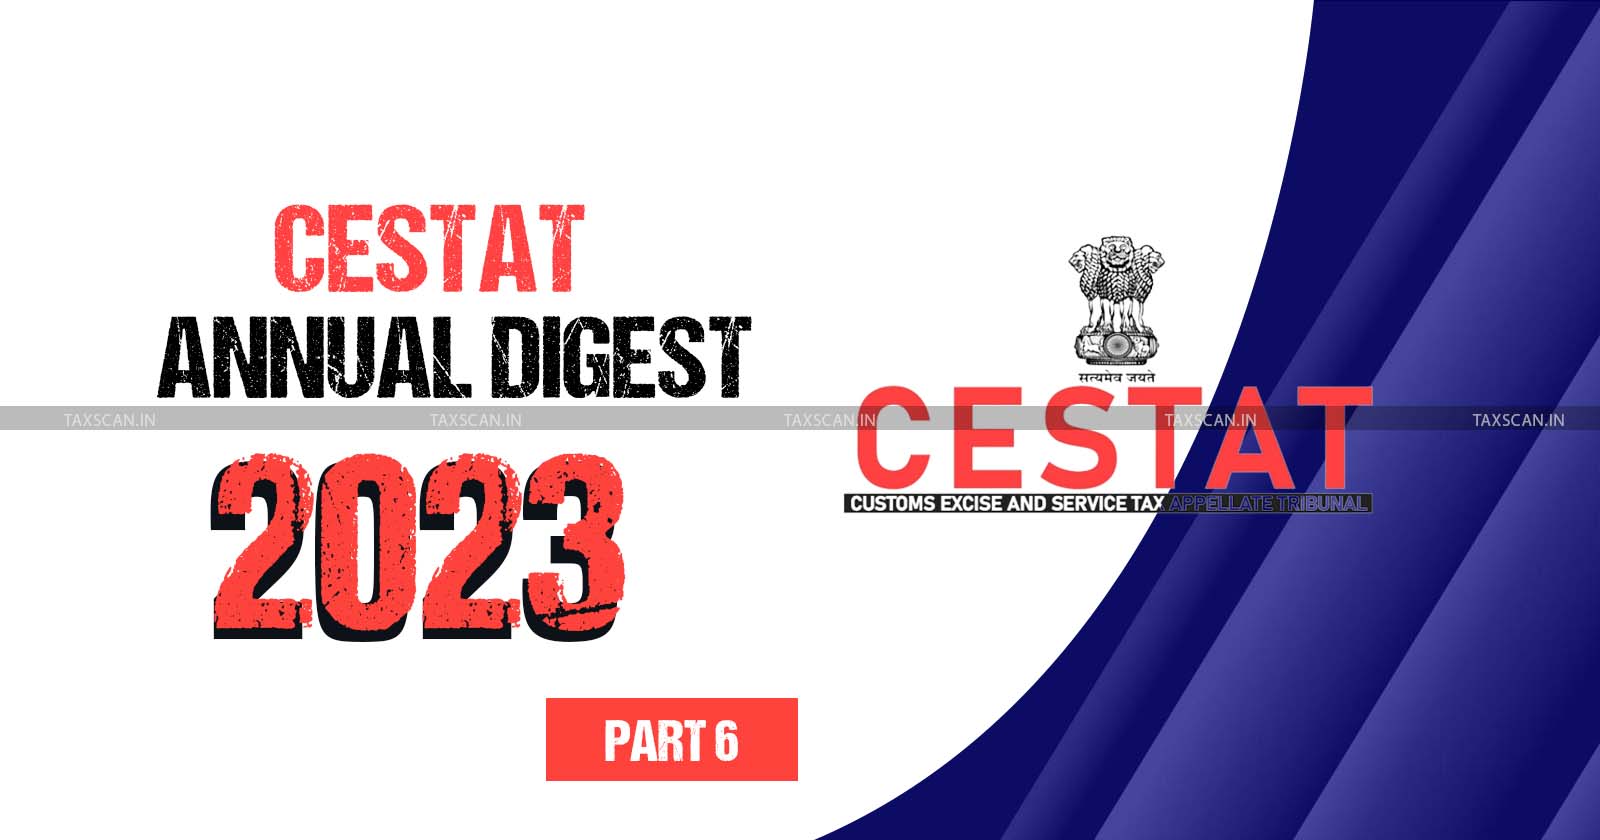 Annual Digest 2023 - CESTAT Annual Digest 2023 - cestat - TAXSCAN